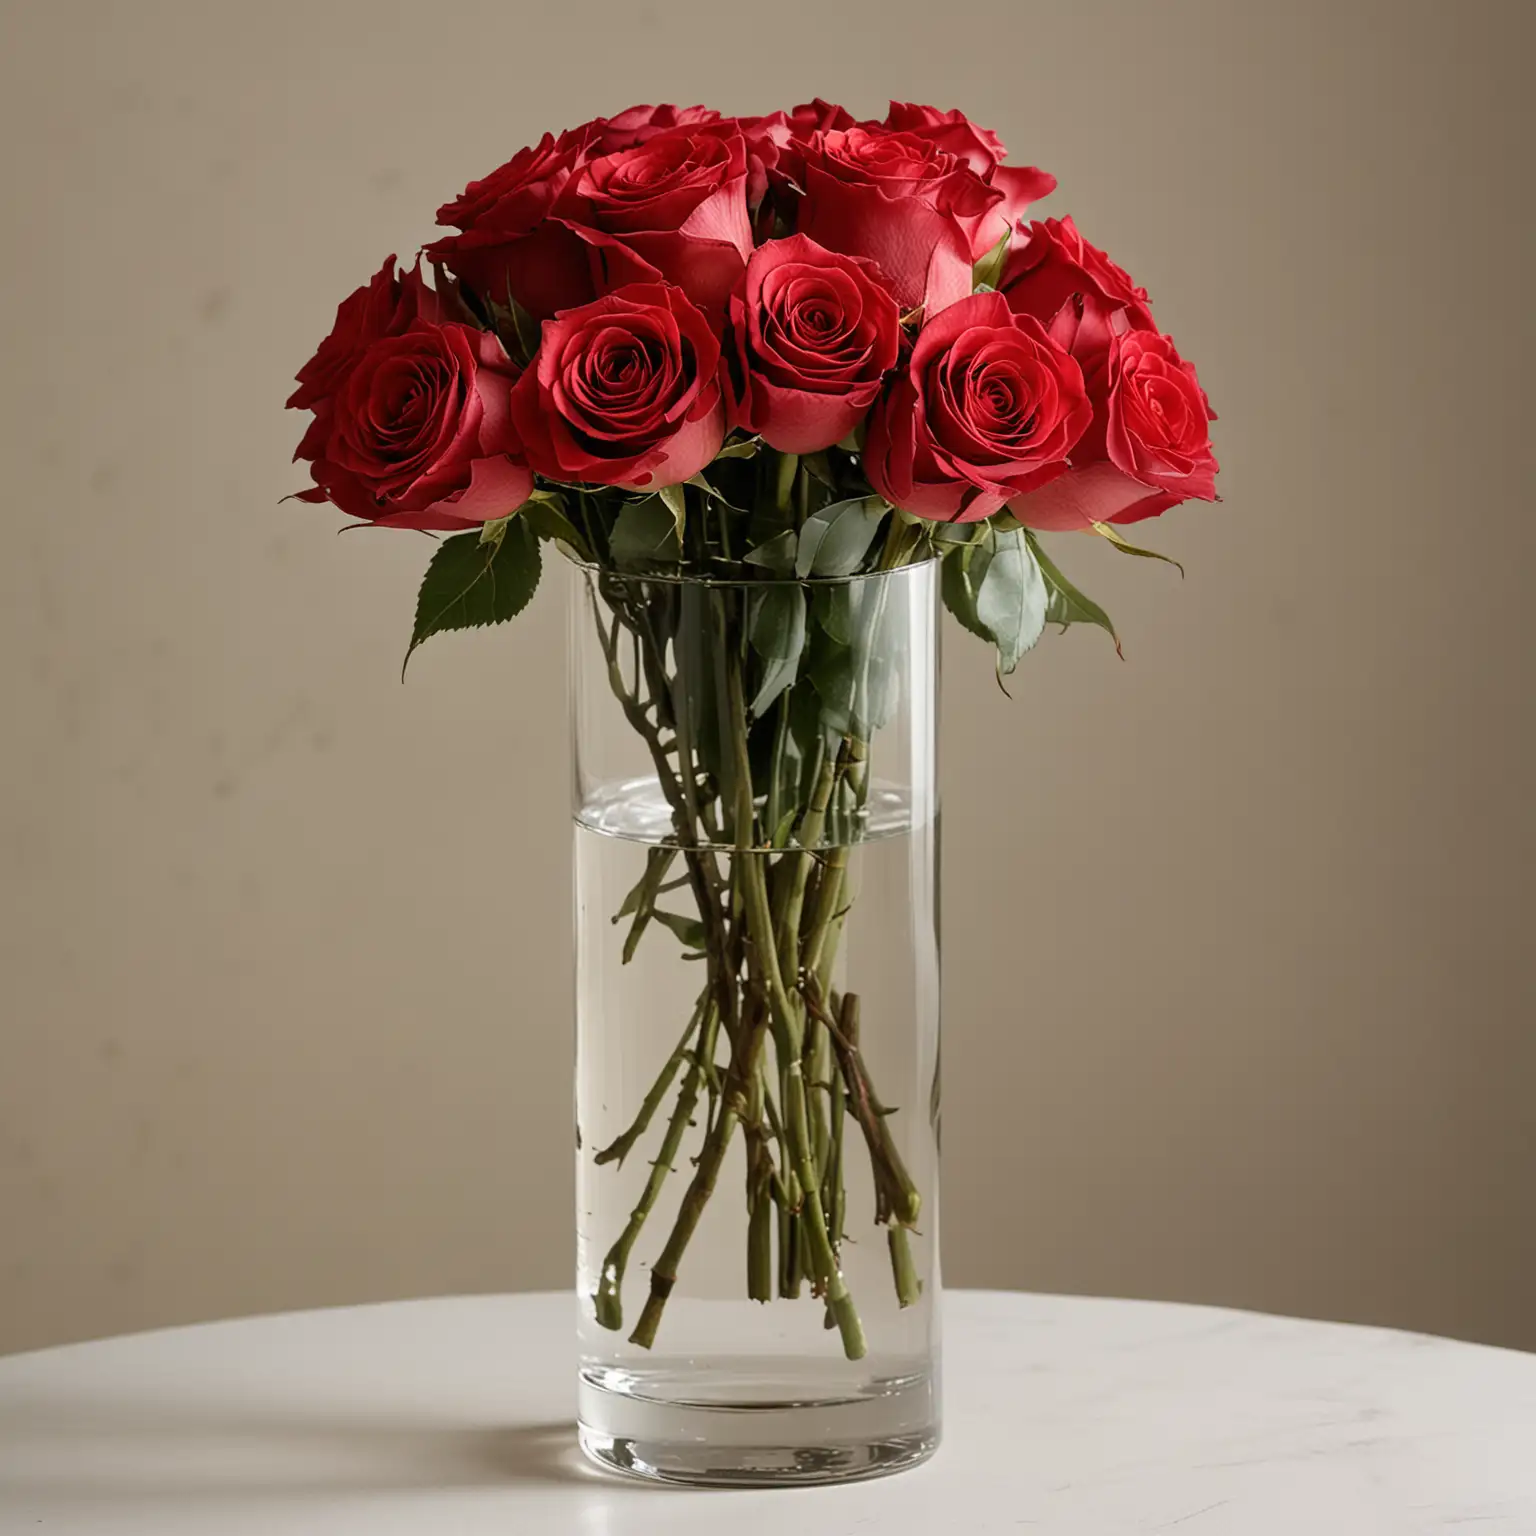 Elegant-Red-Rose-Wedding-Centerpiece-Vase